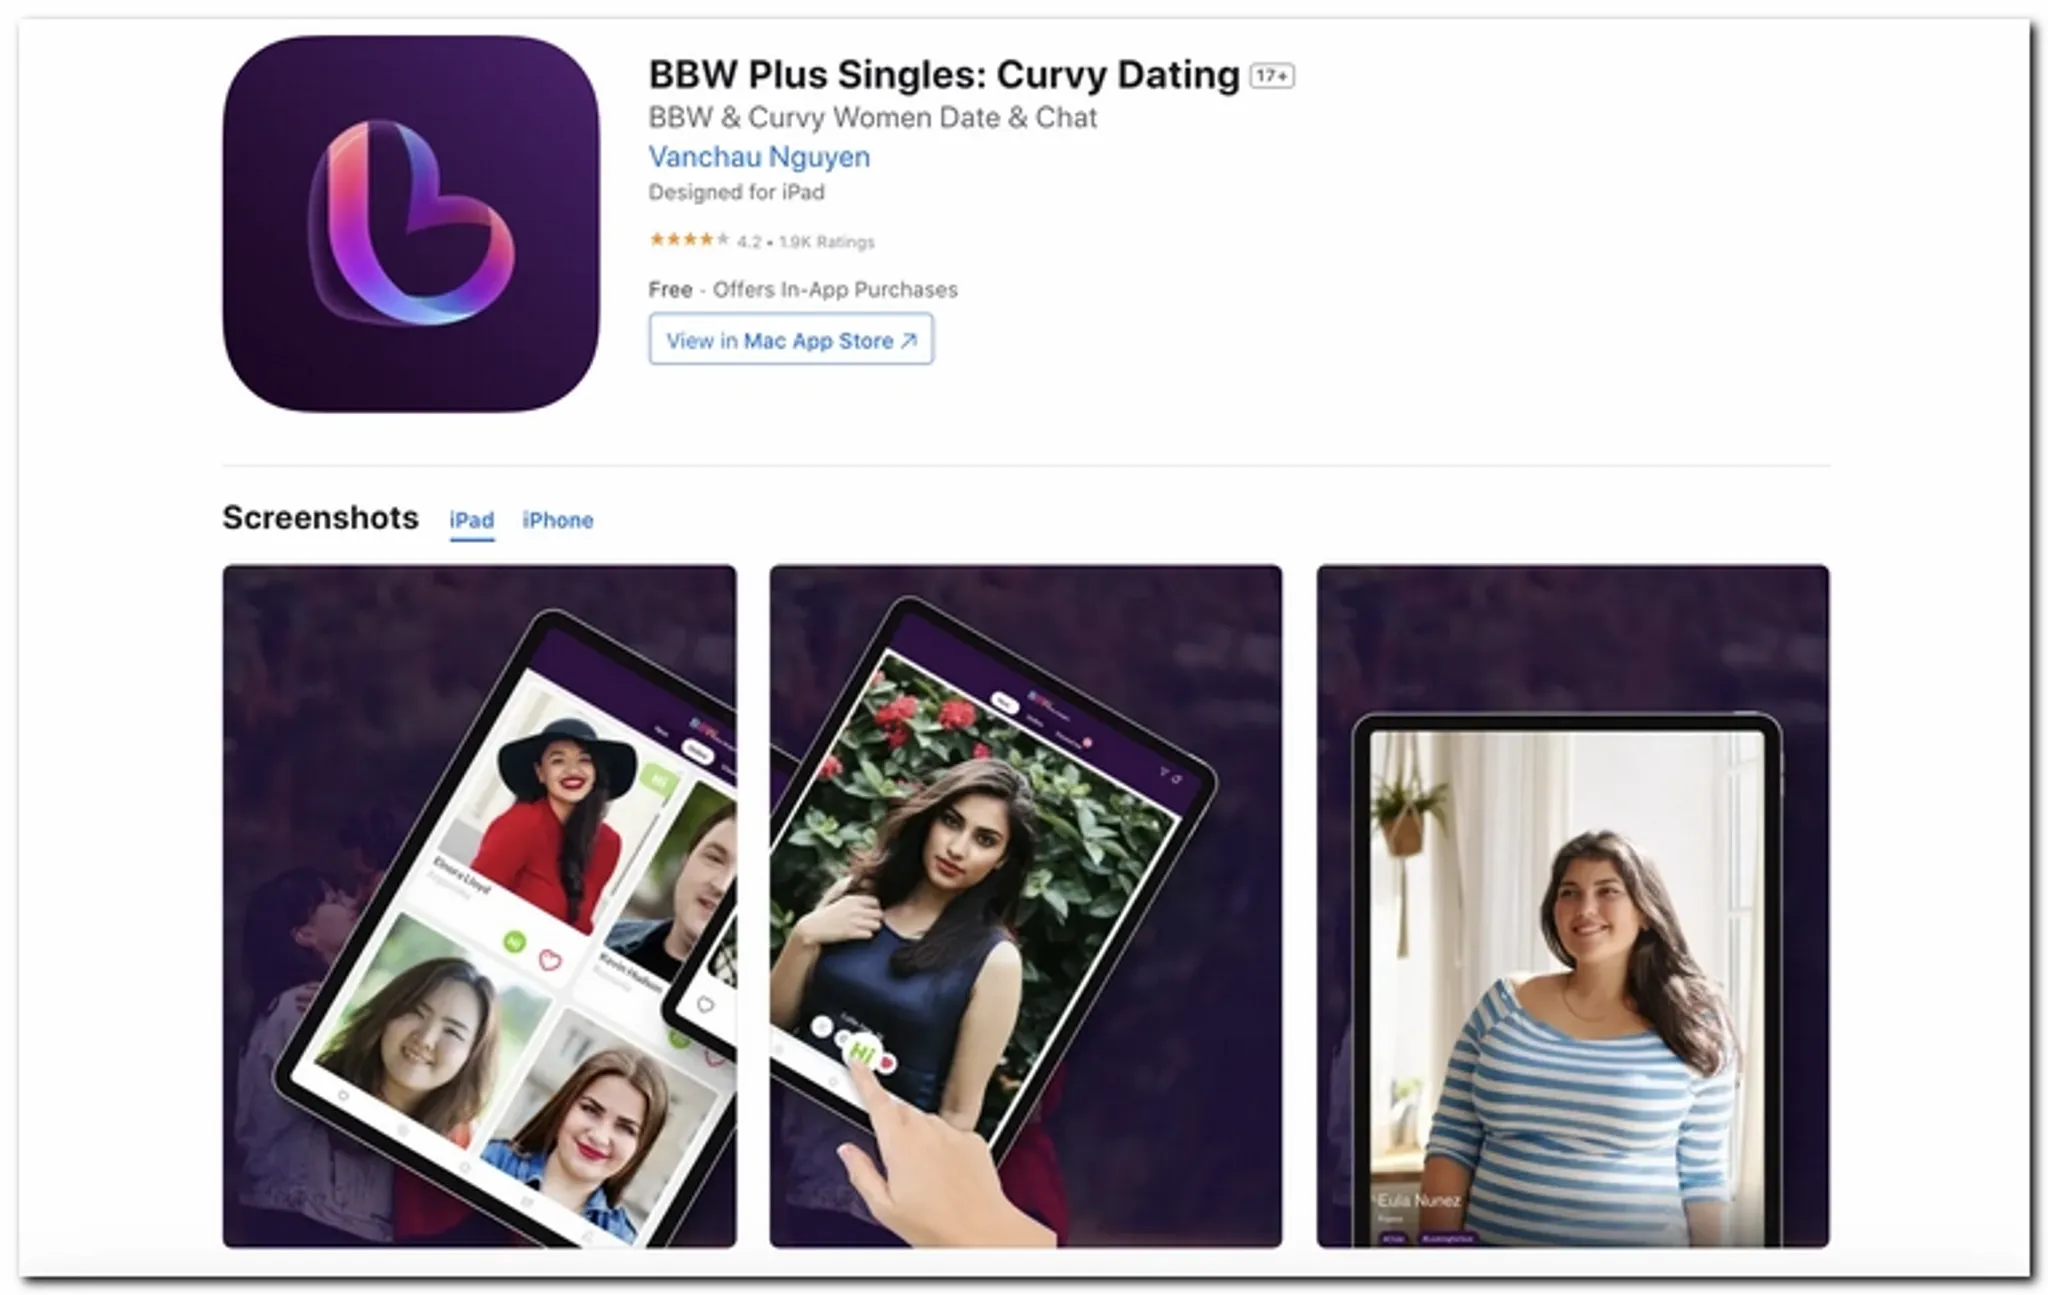 bbw plus singles on app store